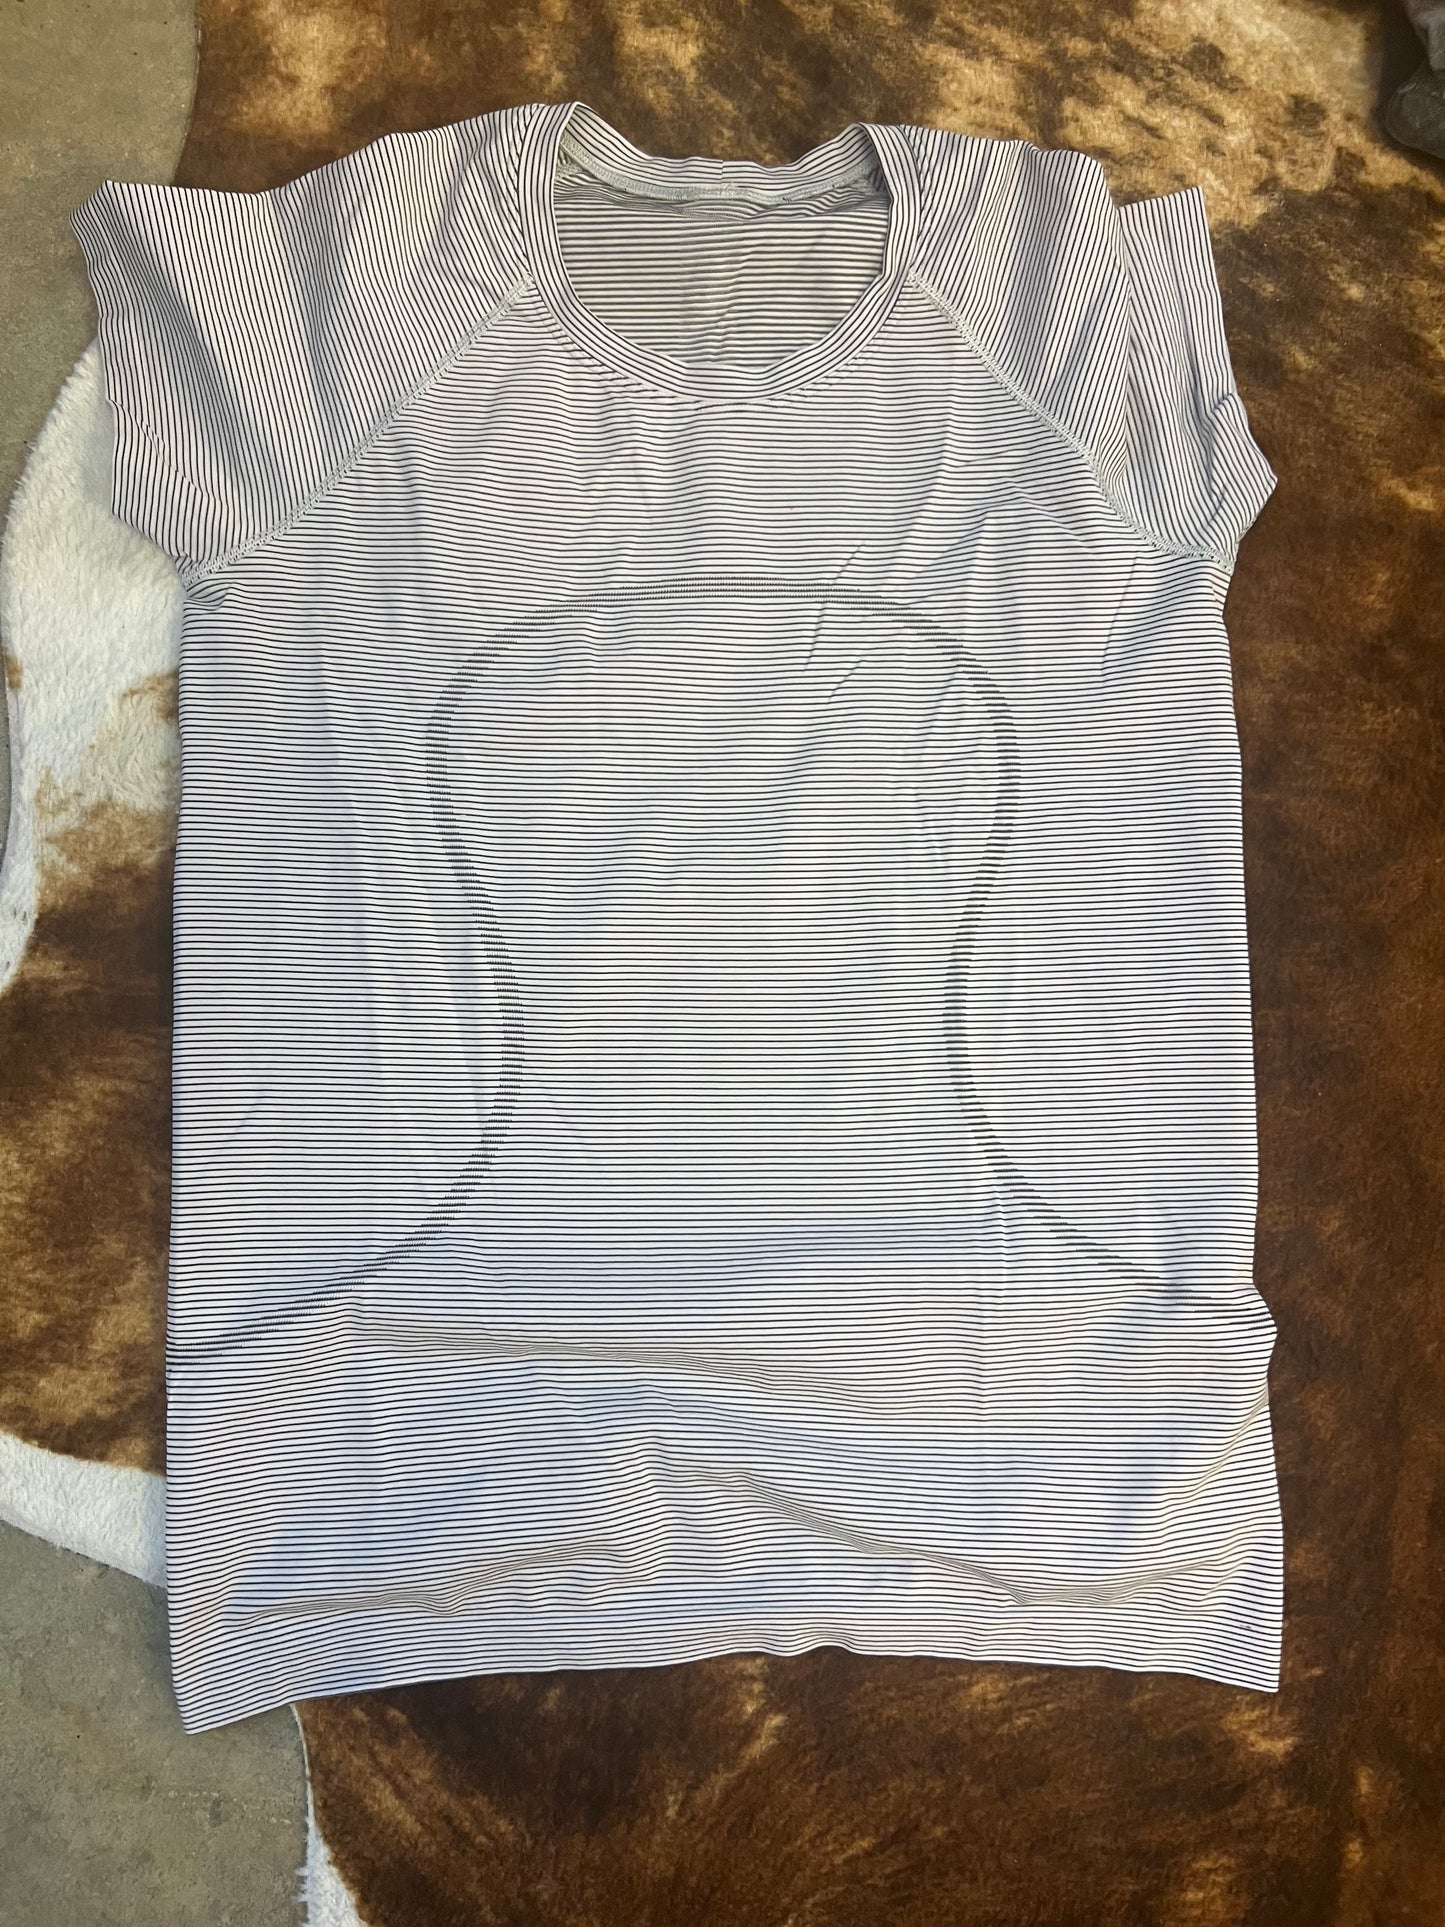 Stripe lululemon shirt size 10